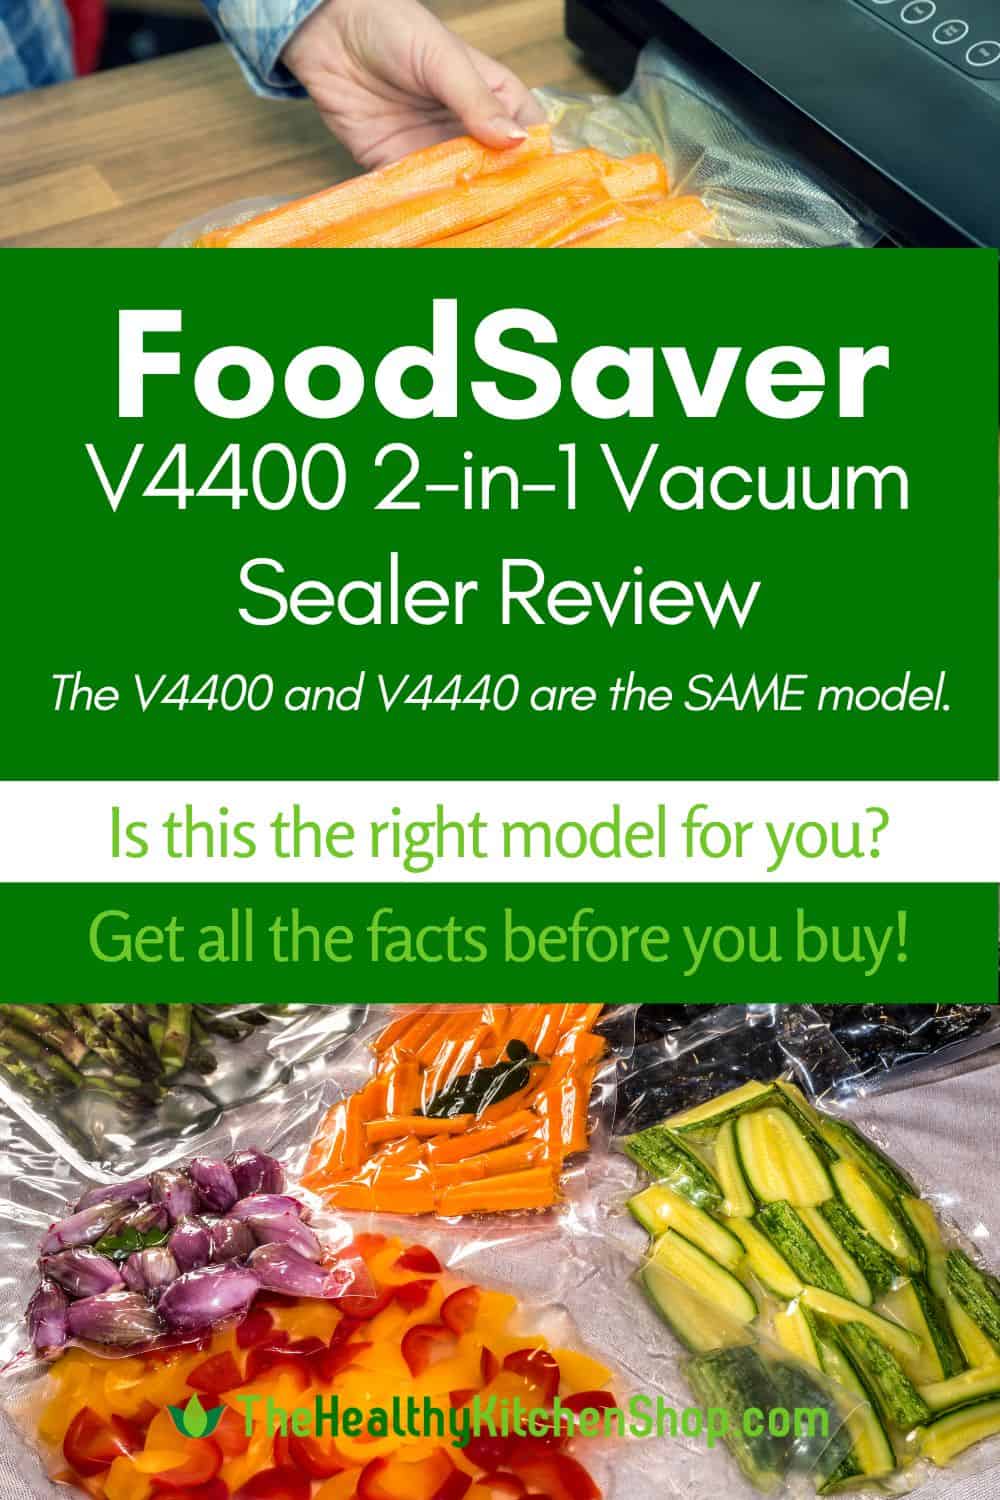 http://www.athenashope.org/jpg/foodsaver-4400-vacuum-sealer-review-101922.jpg